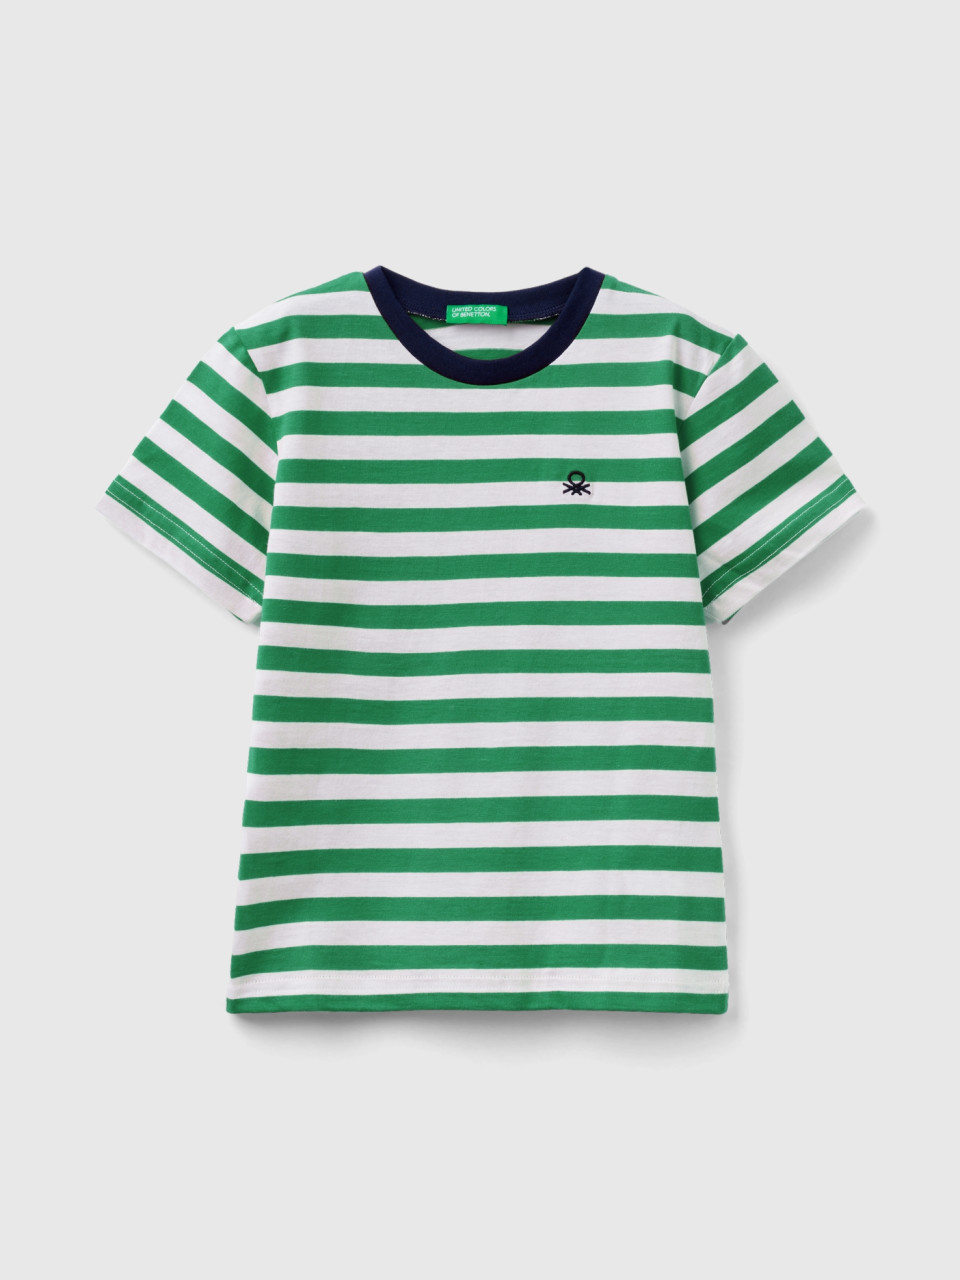 Benetton, Striped 100% Cotton T-shirt, Green, Kids